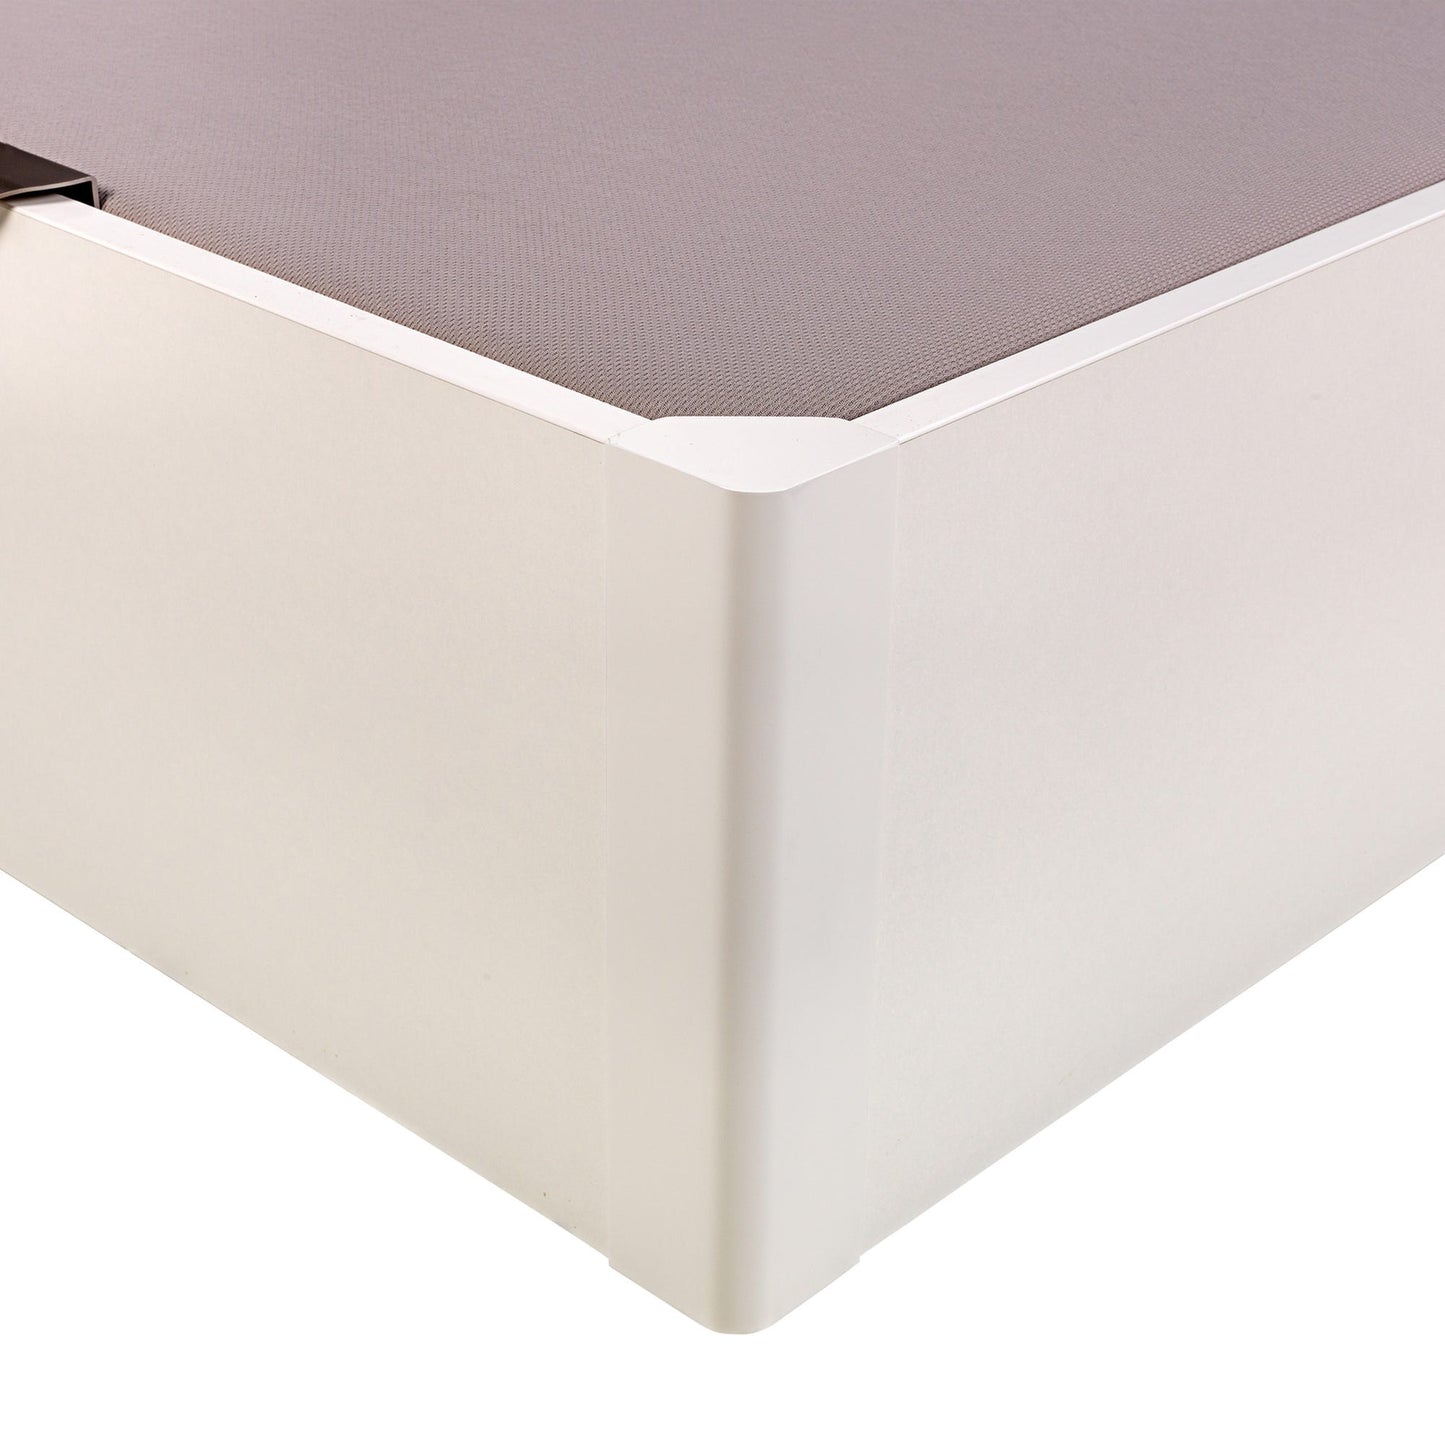 Canapé abatible de madera juvenil de color blanco - DESIGN JUV - 105x200